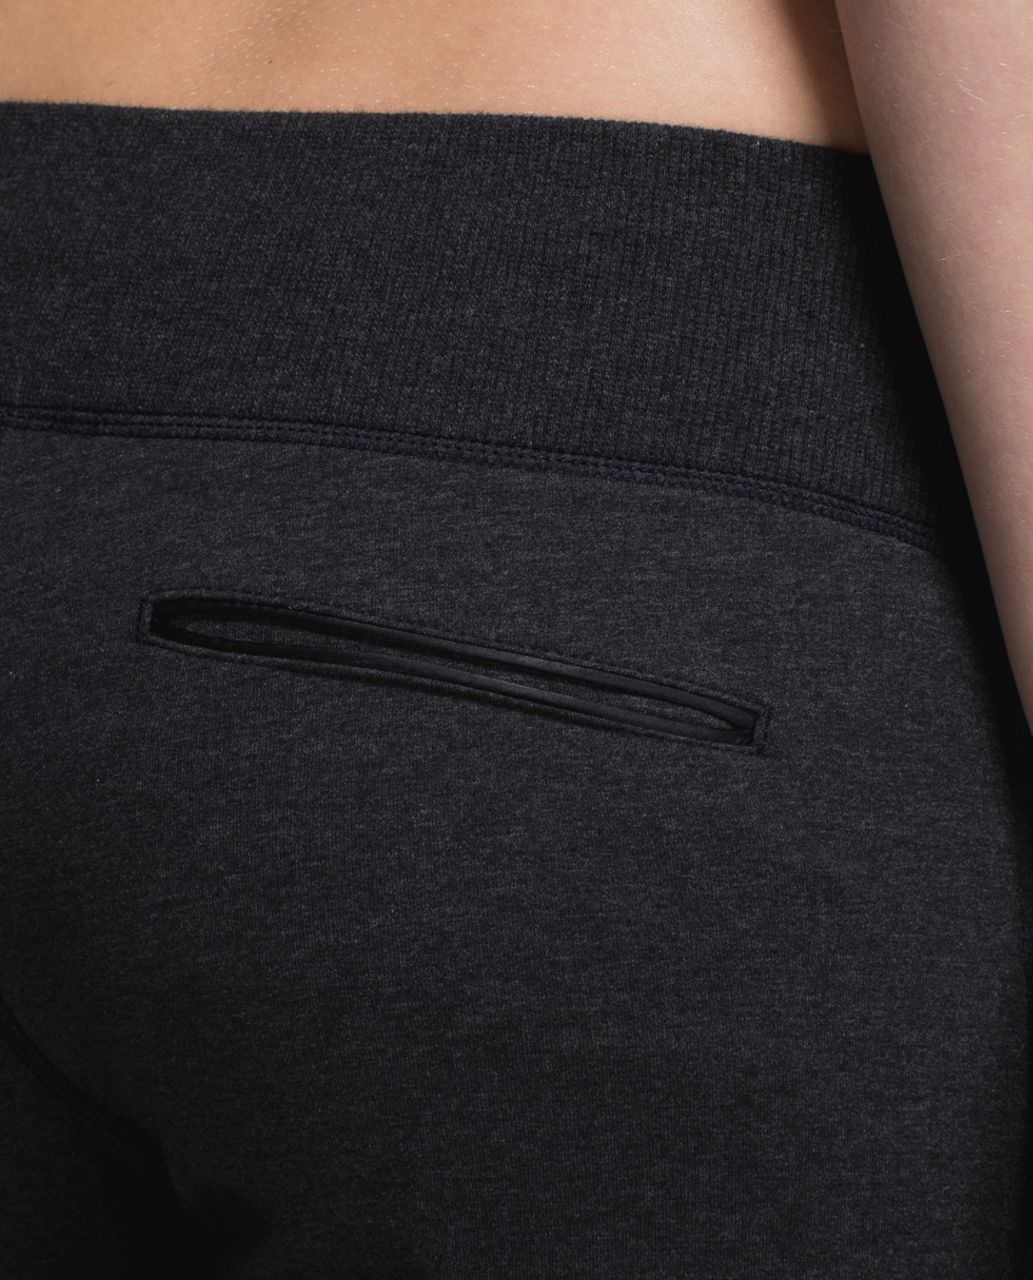 Lululemon Men’s Soft Jersey Tapered Pant Black Size Large 28 Inch Inseam 